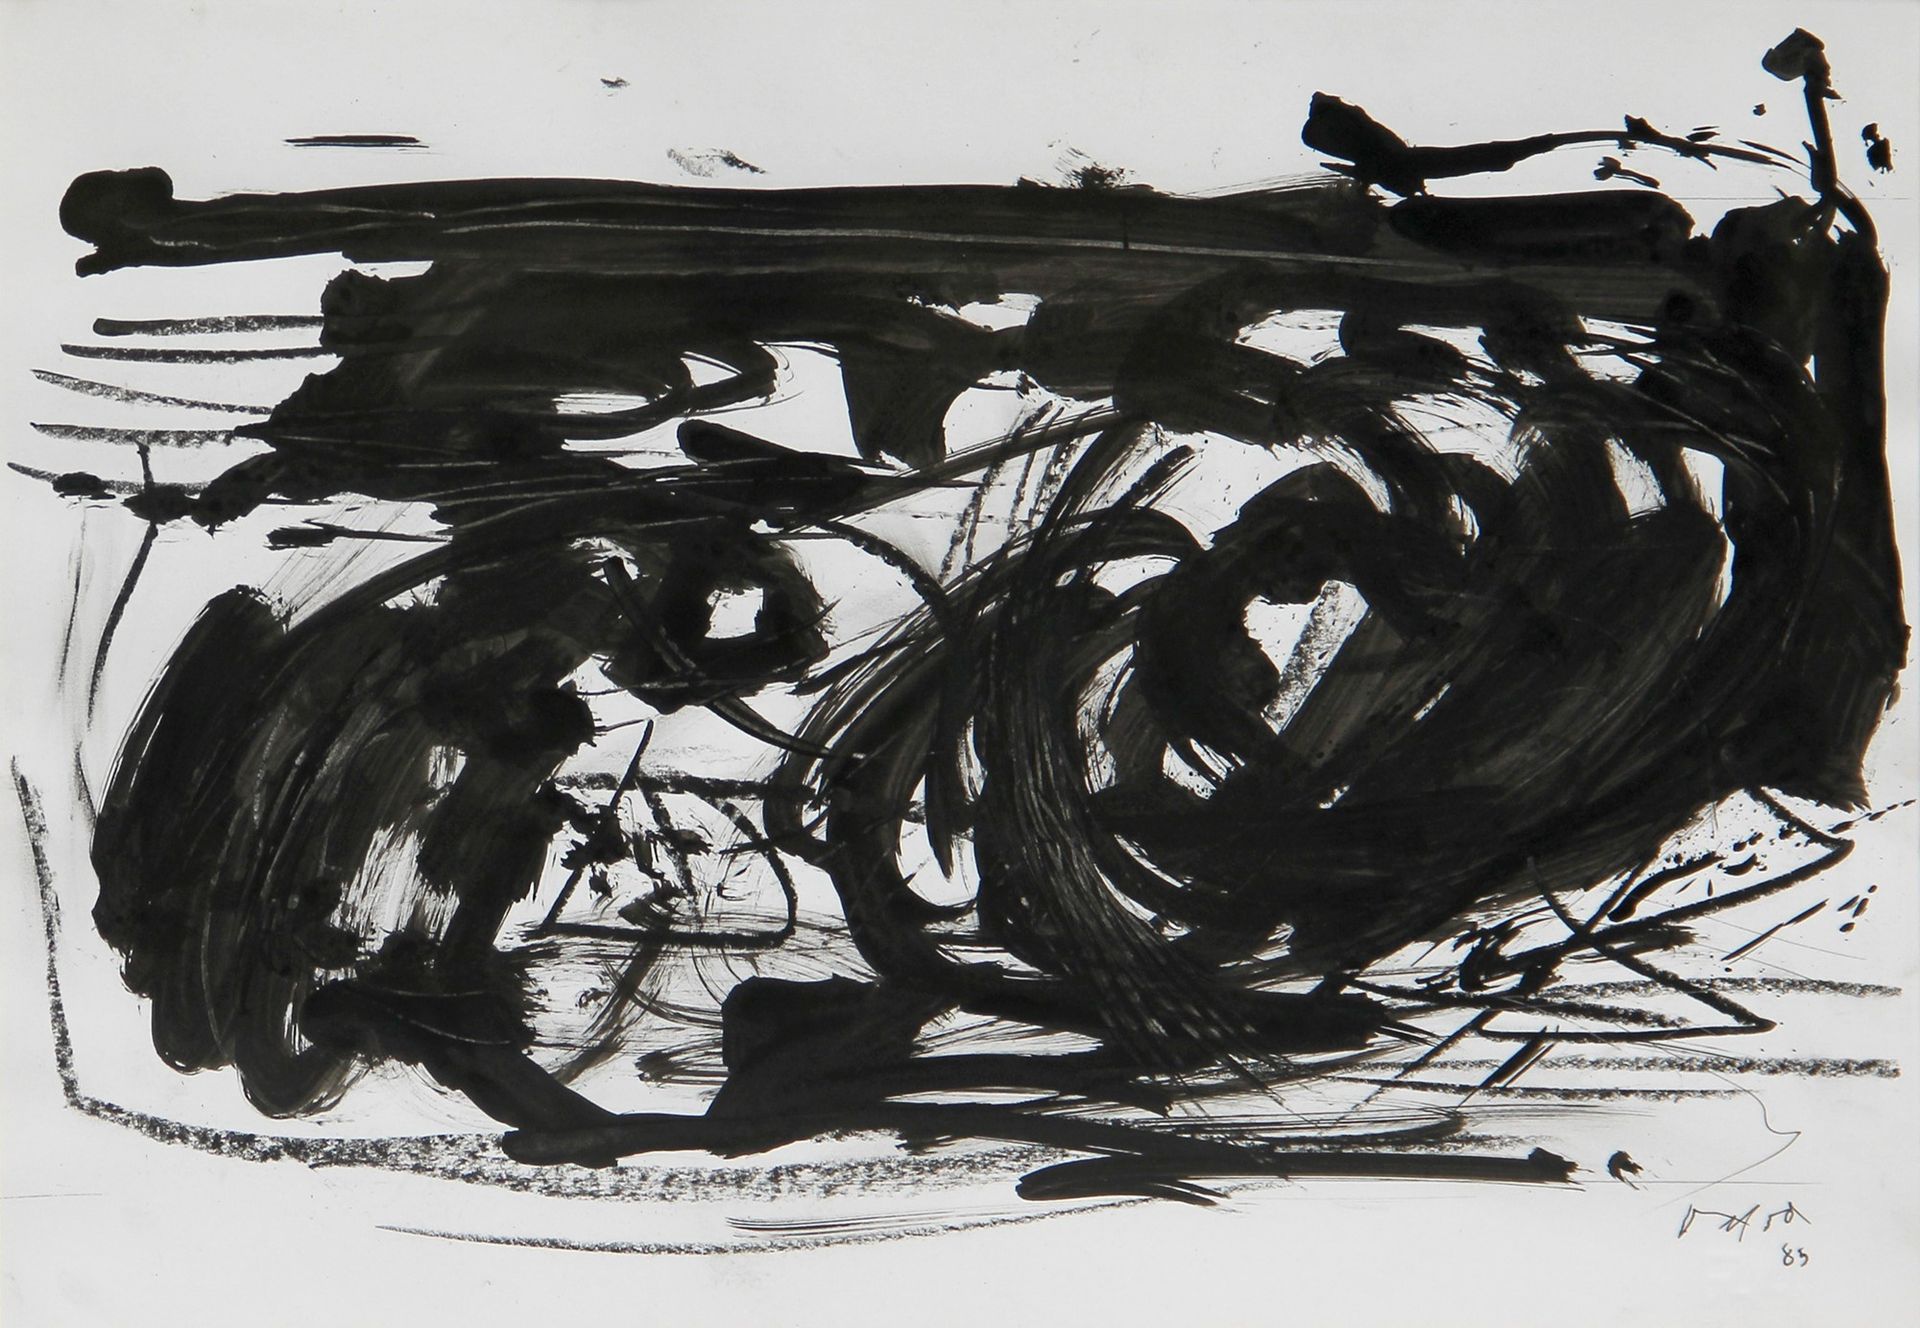 Emilio VEDOVA Untitled 1985, ink and charcoal on cardboard, cm. 33x47,8

Certifi&hellip;